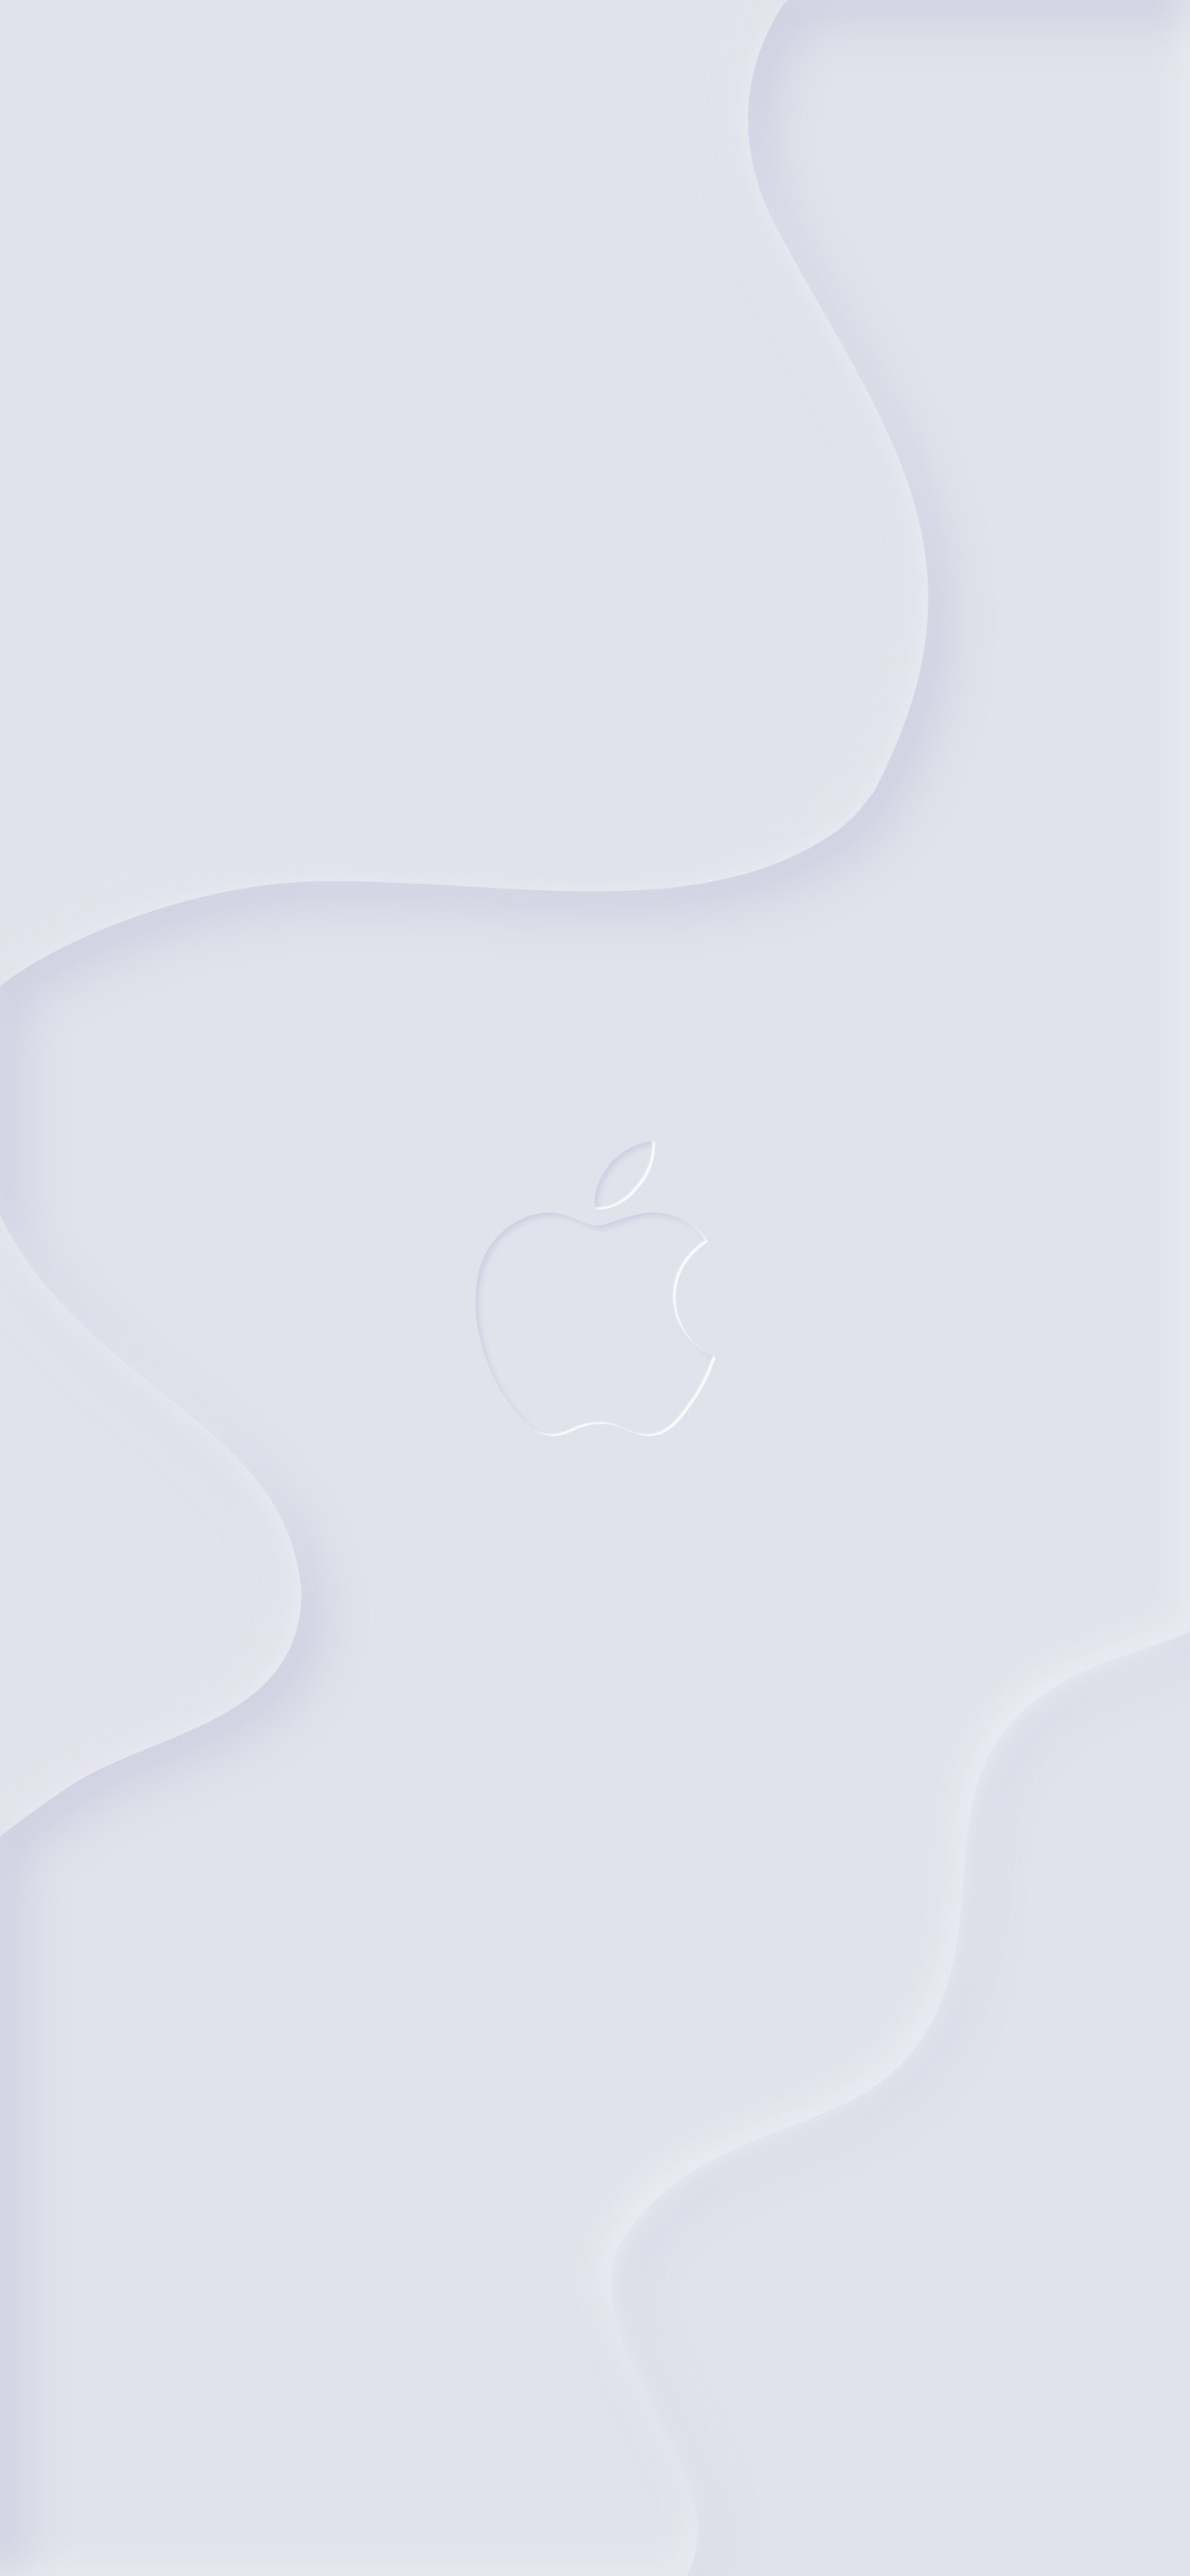 neumorphism-iphone-wallpaper-ispazio-idownloadblog-apple-logo-white